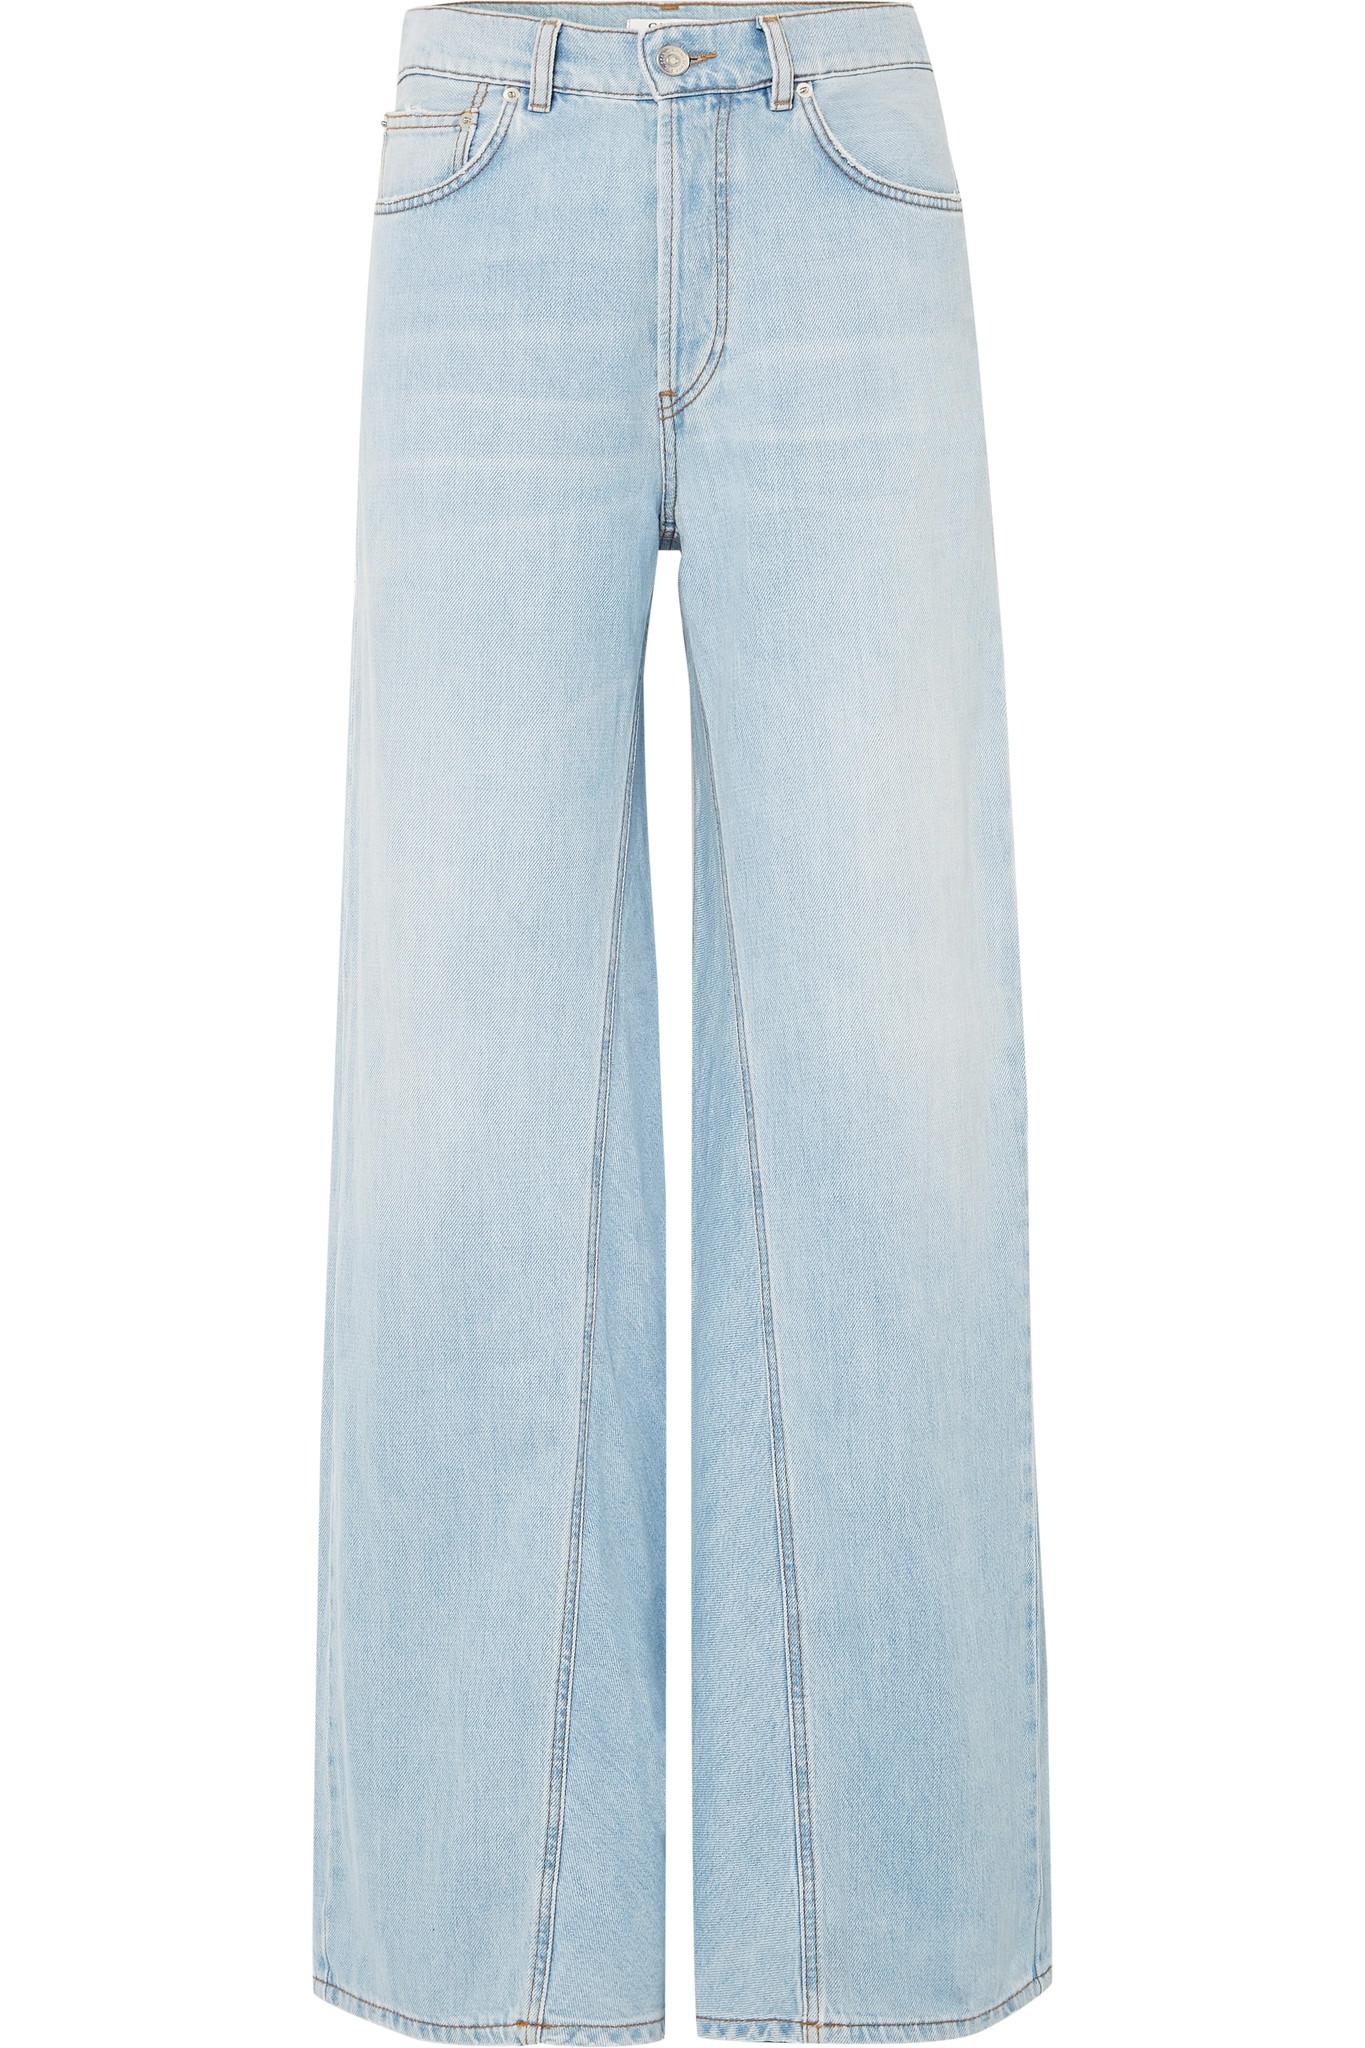 Lyst - Ganni High-rise Wide-leg Jeans in Blue